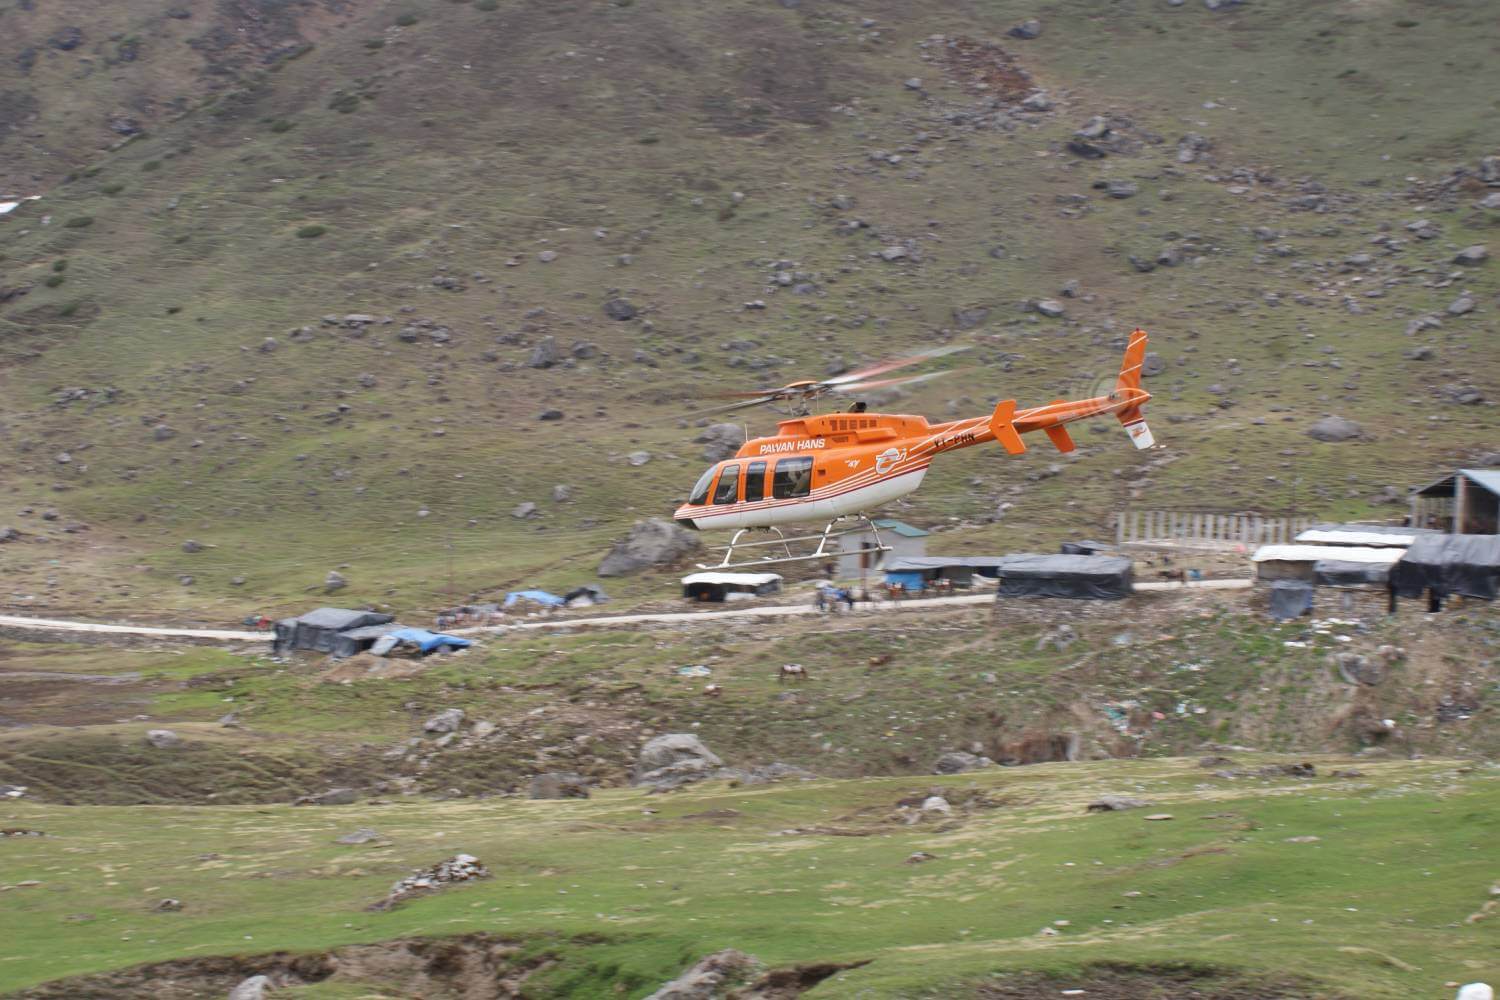 Kedarnath Yatra by Helicopter